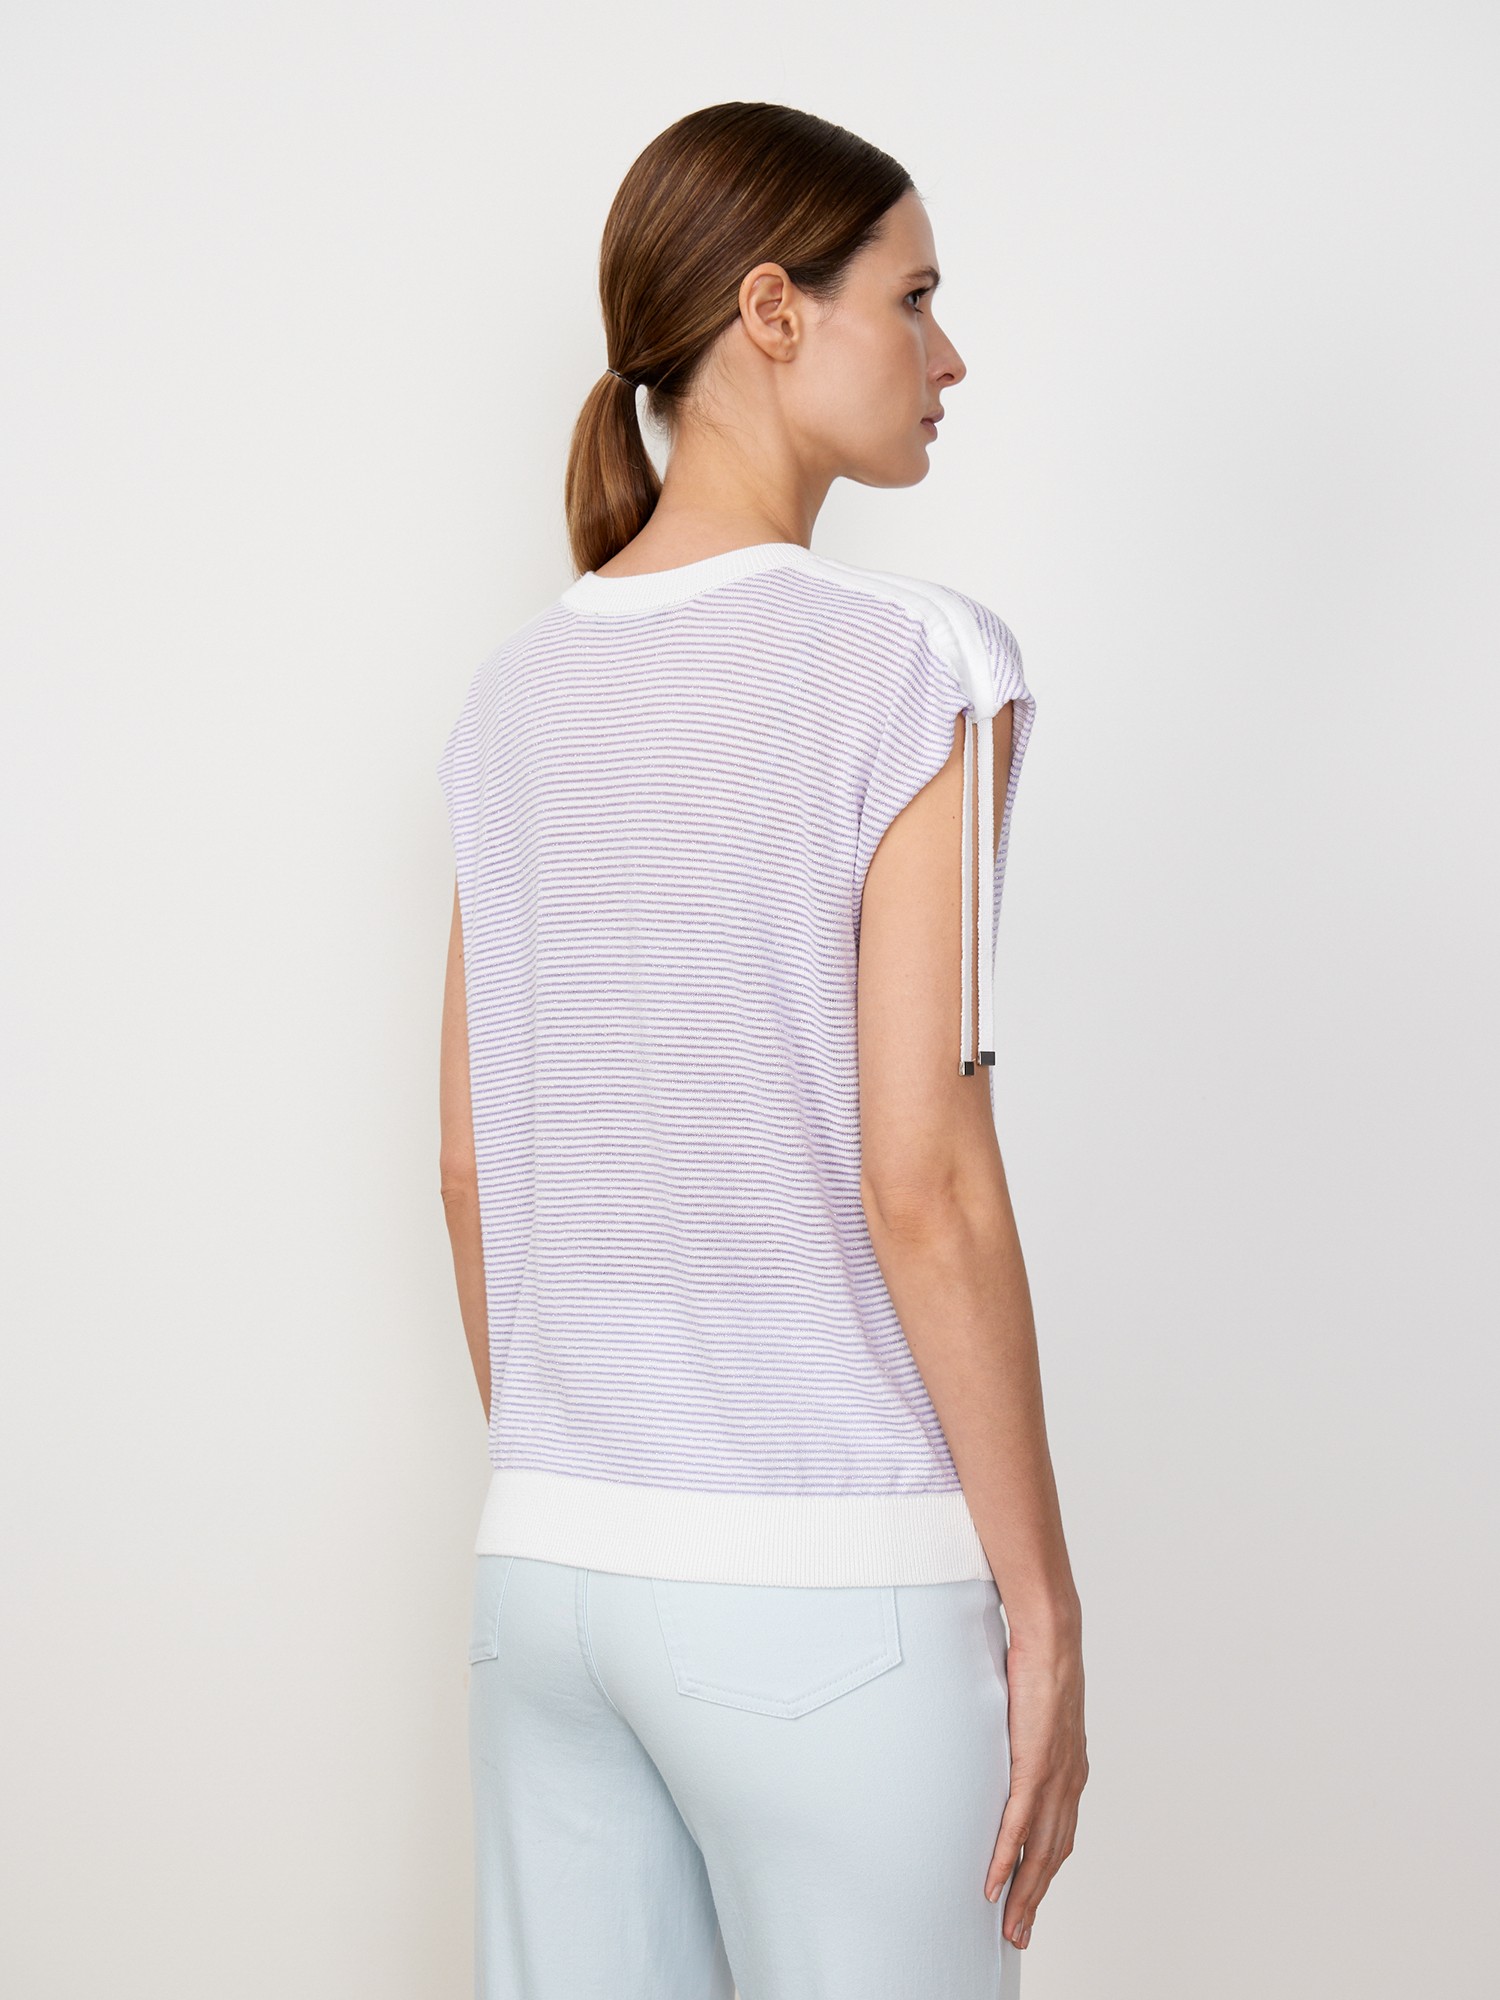 Вязаная блуза с люрексом Elis BL1054V, цвет фиолетовый, размер 44 - фото 4